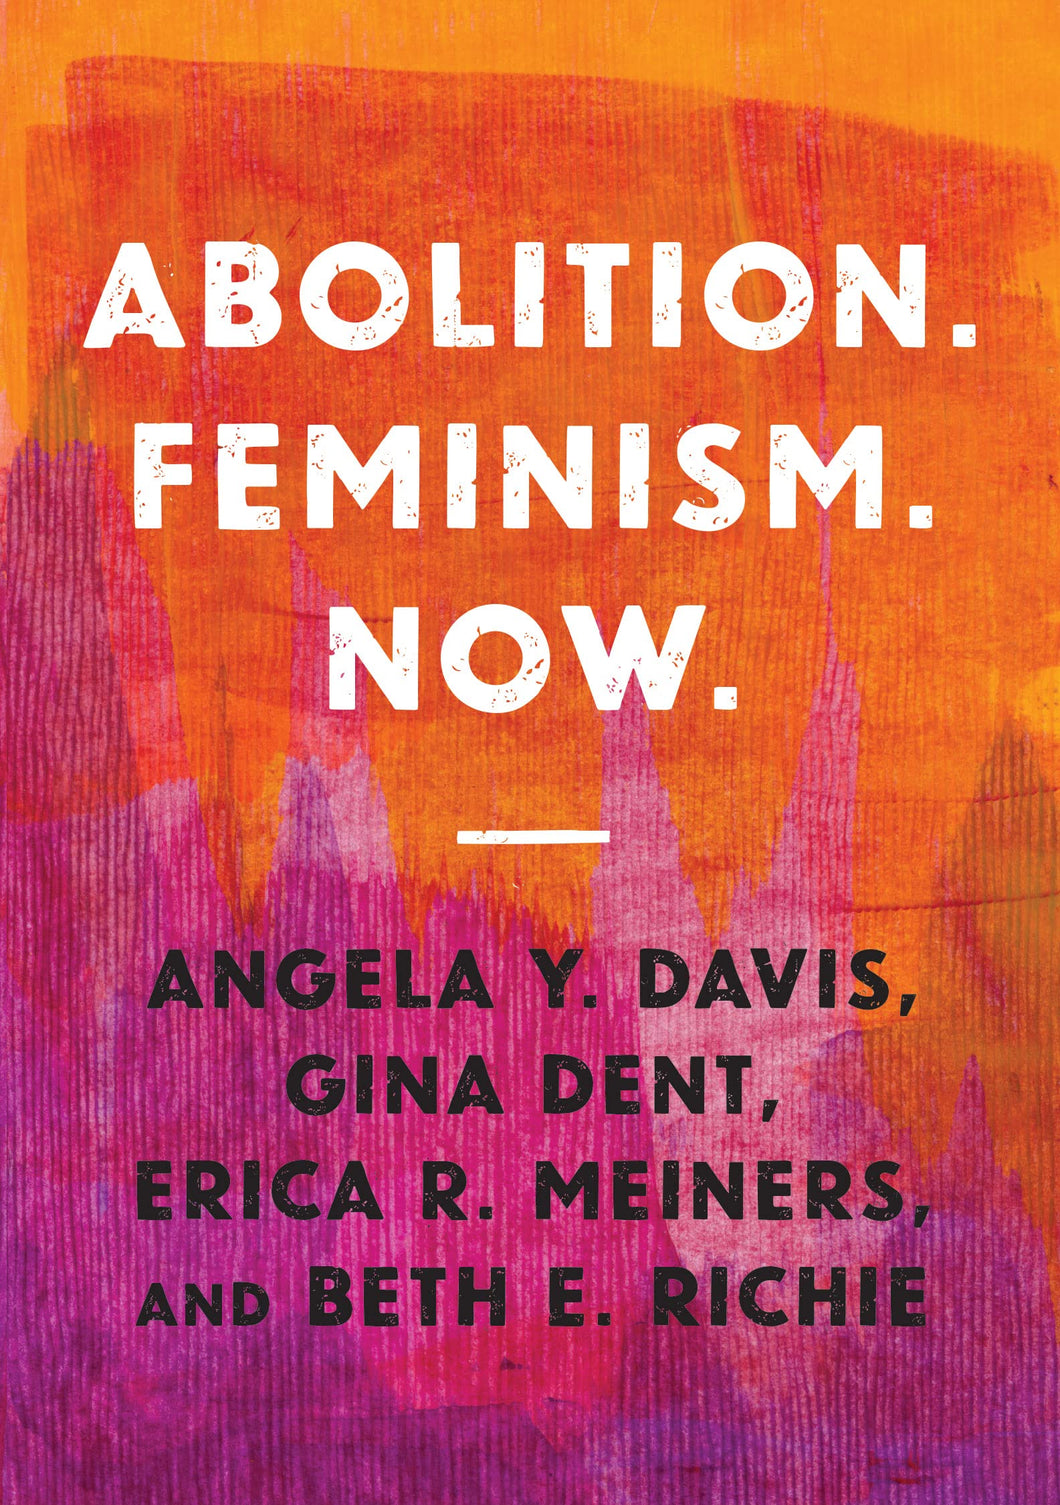 Abolition. Feminism. Now. by Angela Y. Davis, Gina Dent, Erica R. Meiners, Beth E. Richie